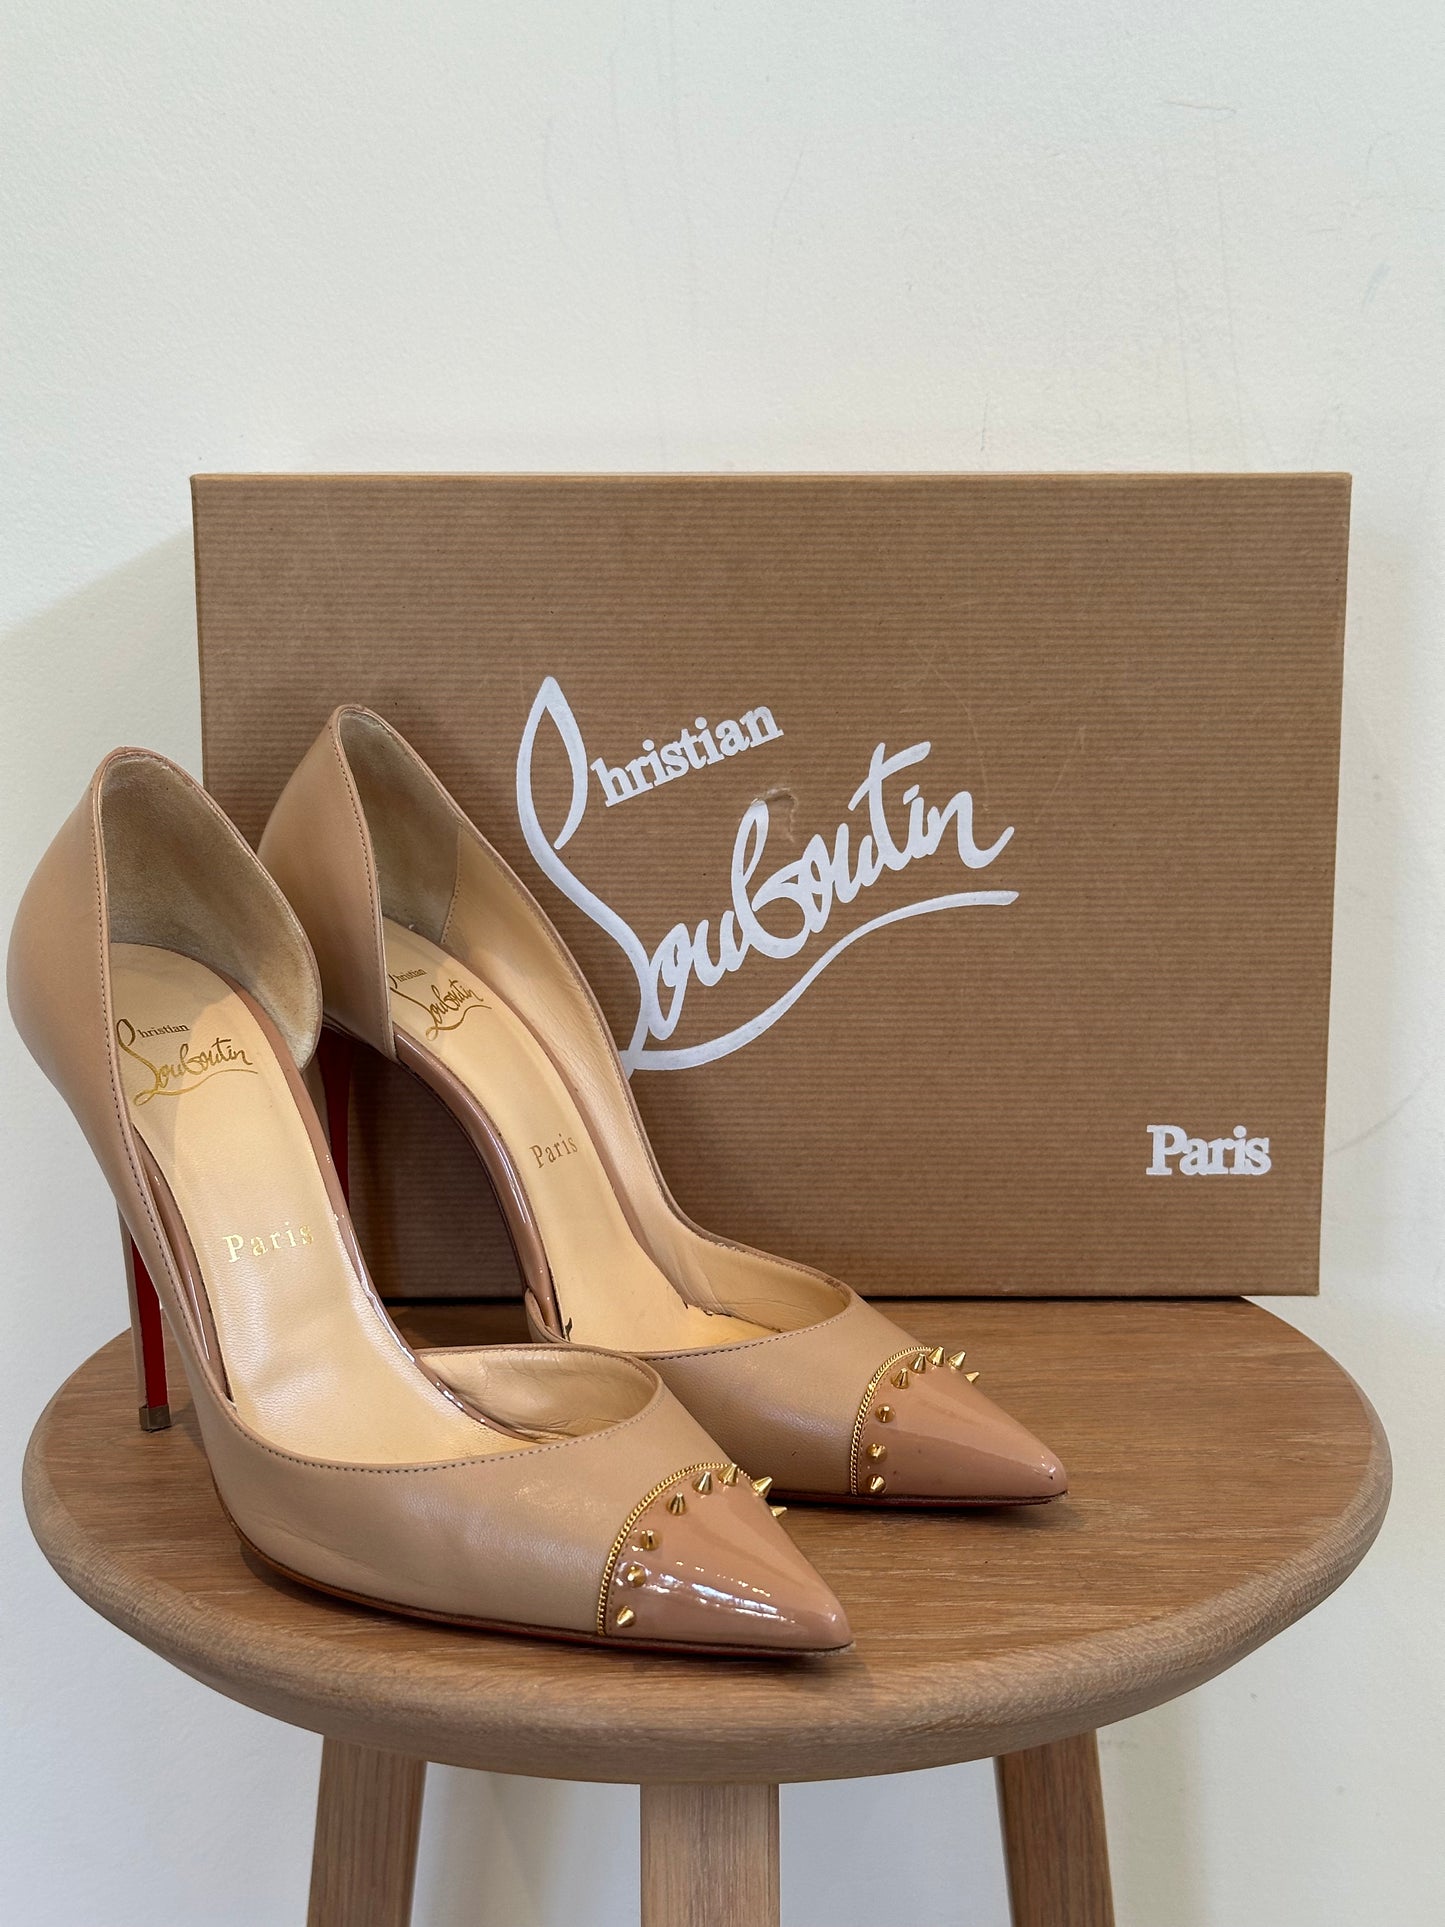 Christian Louboutin Culturella Shoes - Size 36.5